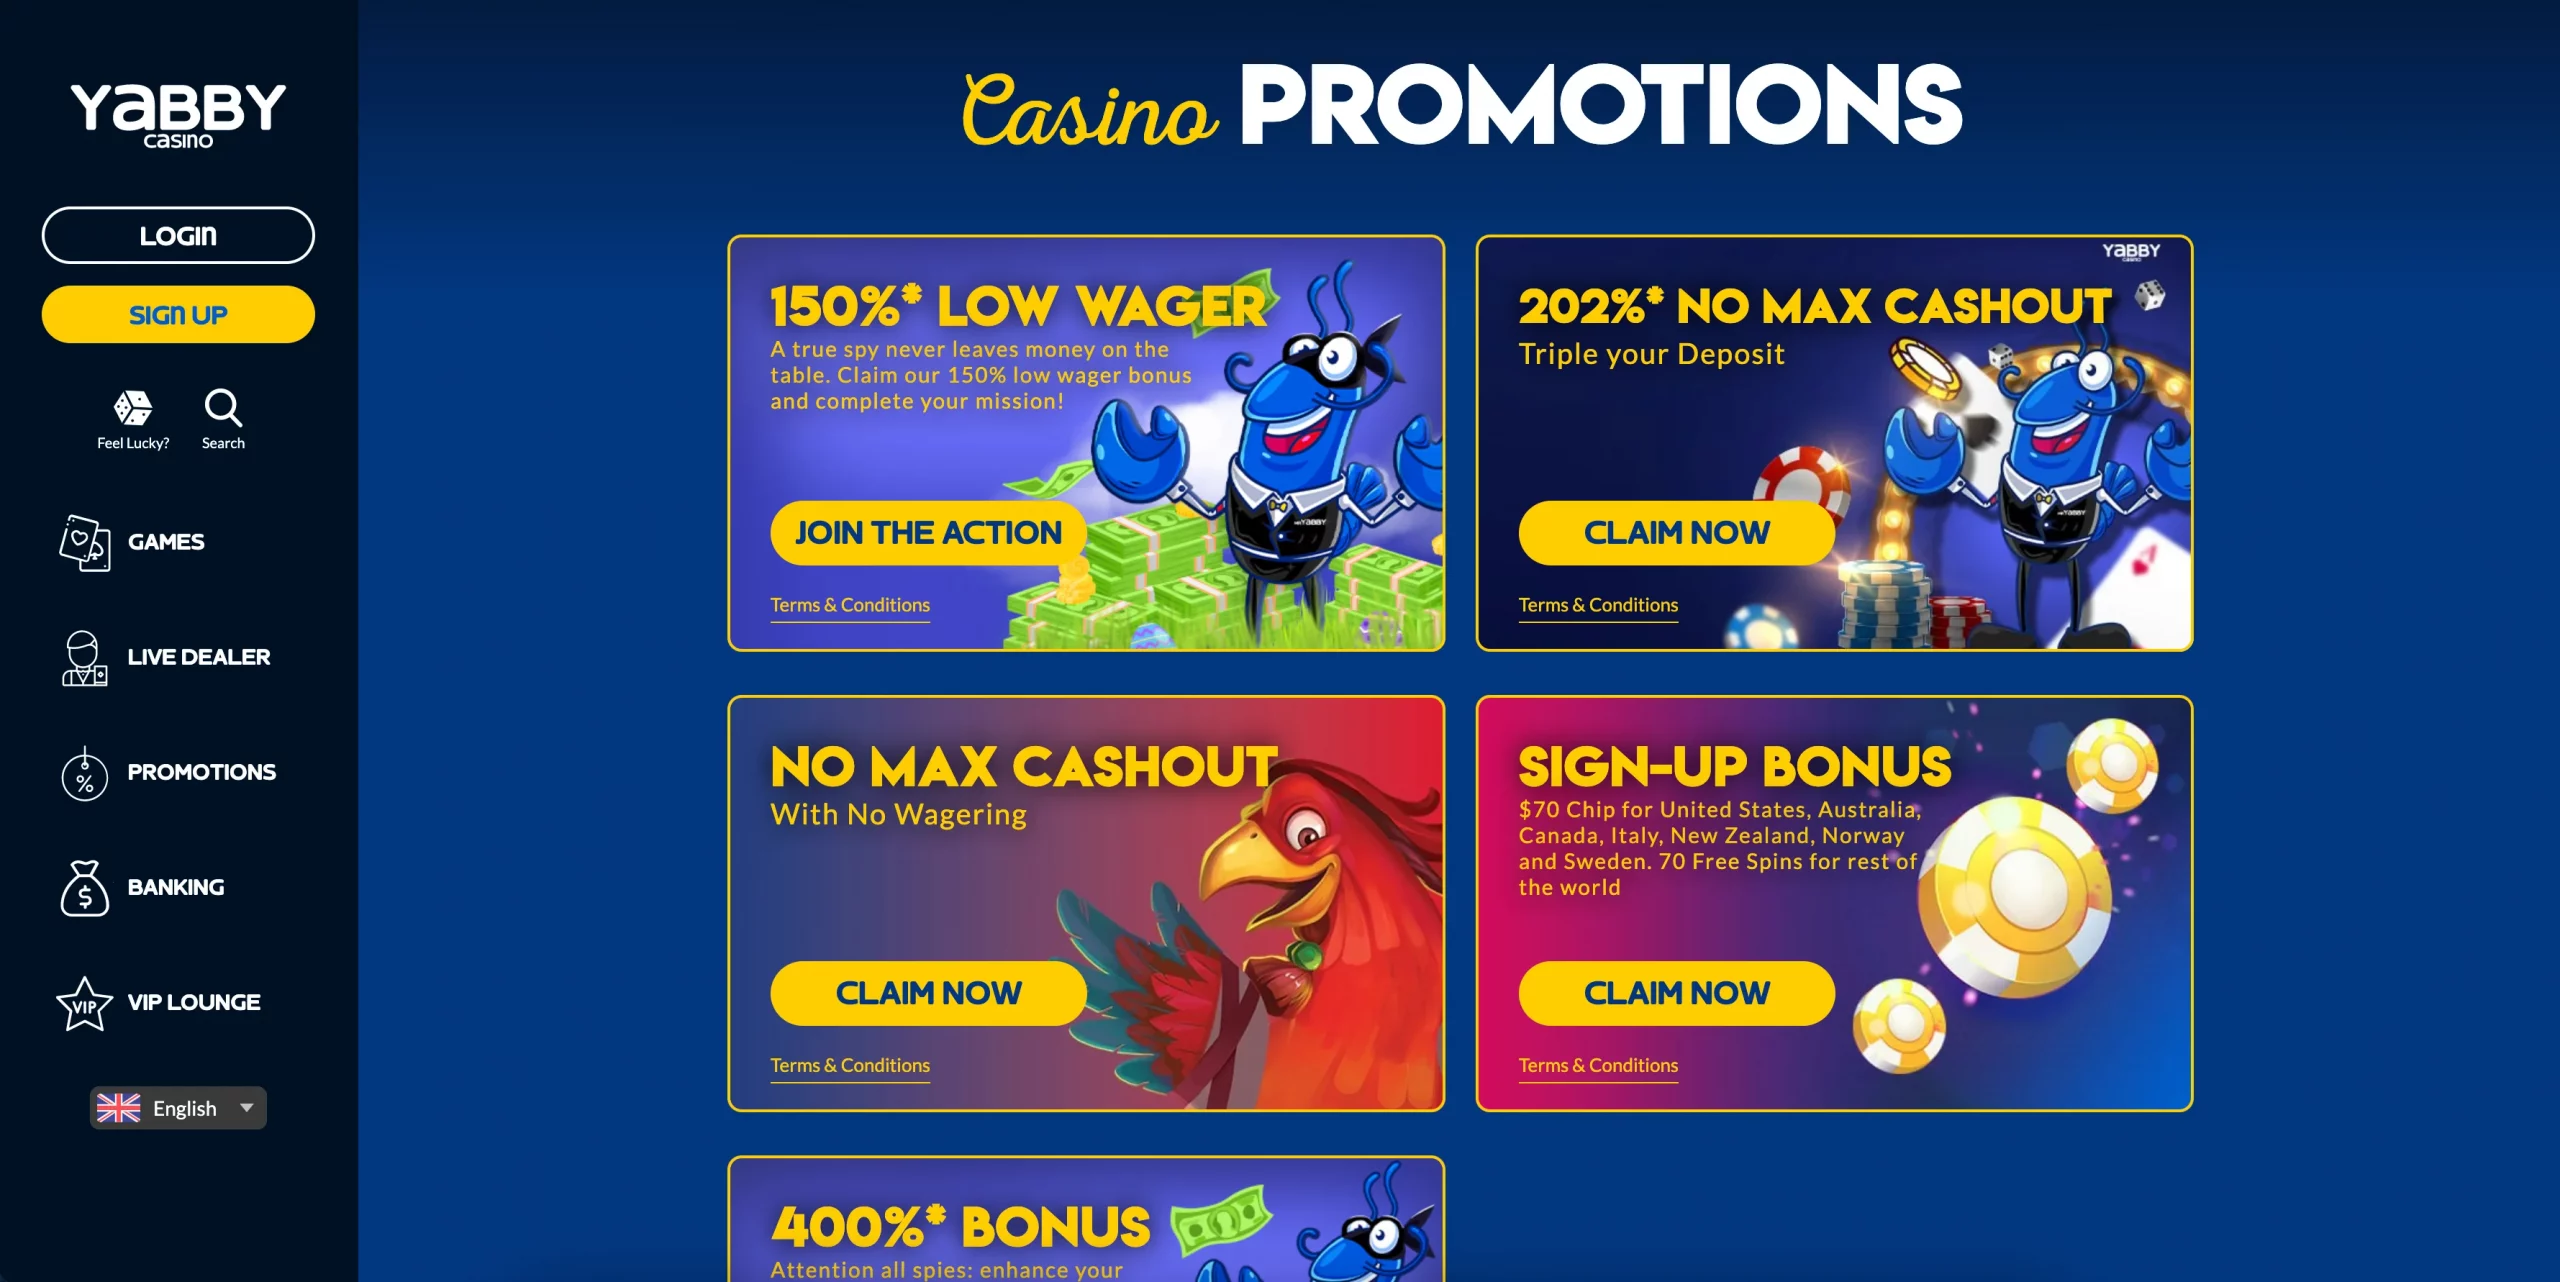 Yabby Casino promotions